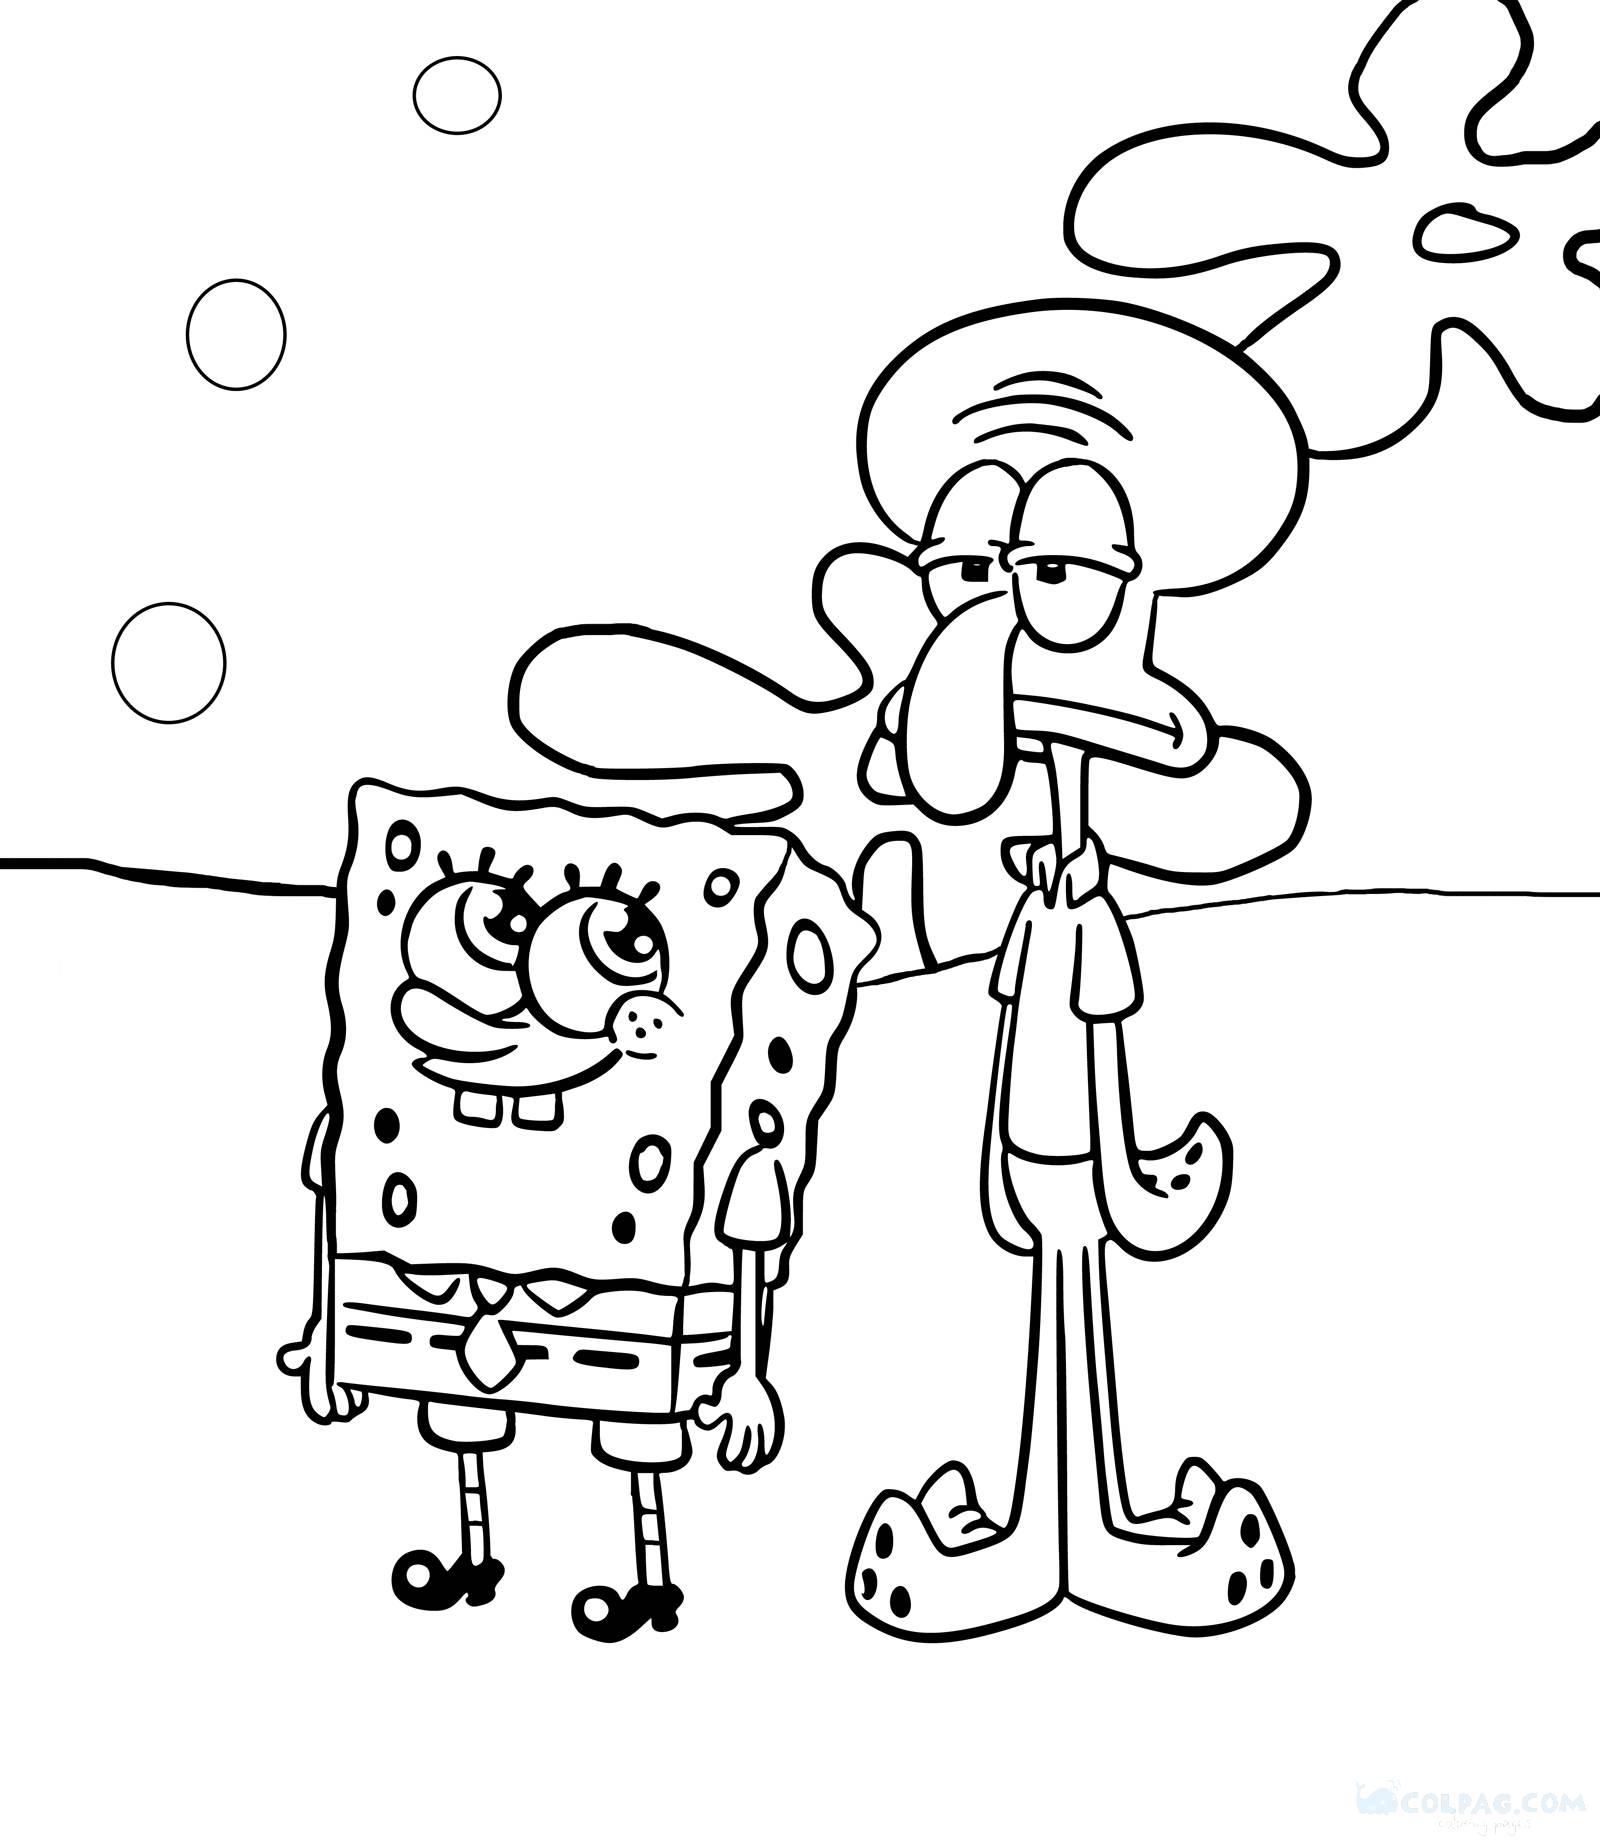 sponge-bob-coloring-page-colpag-com-36